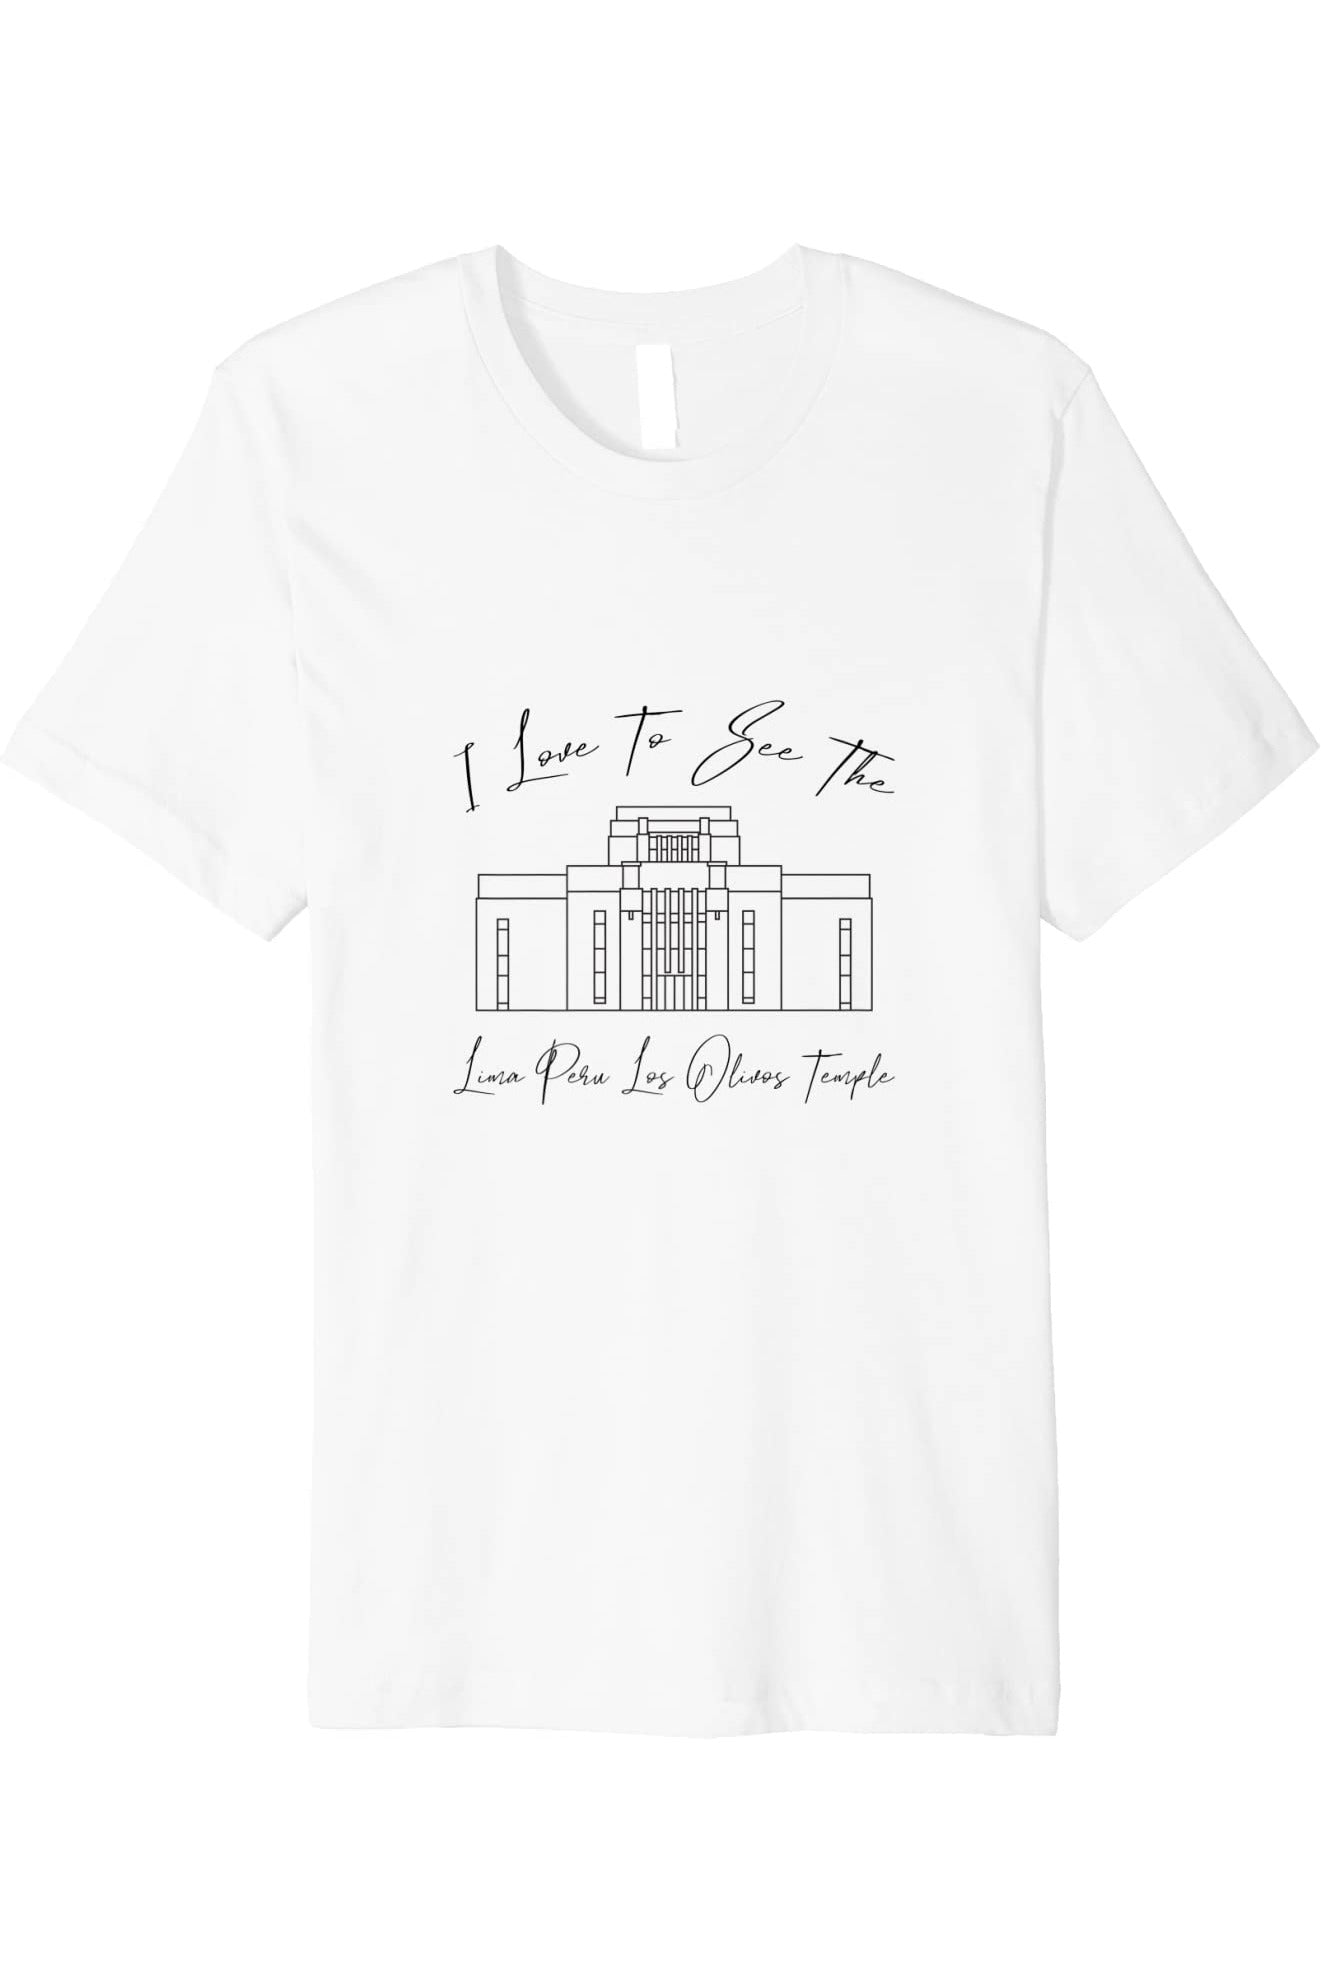 Lima Peru Los Olivos Temple T-Shirt - Premium - Calligraphy Style (English) US